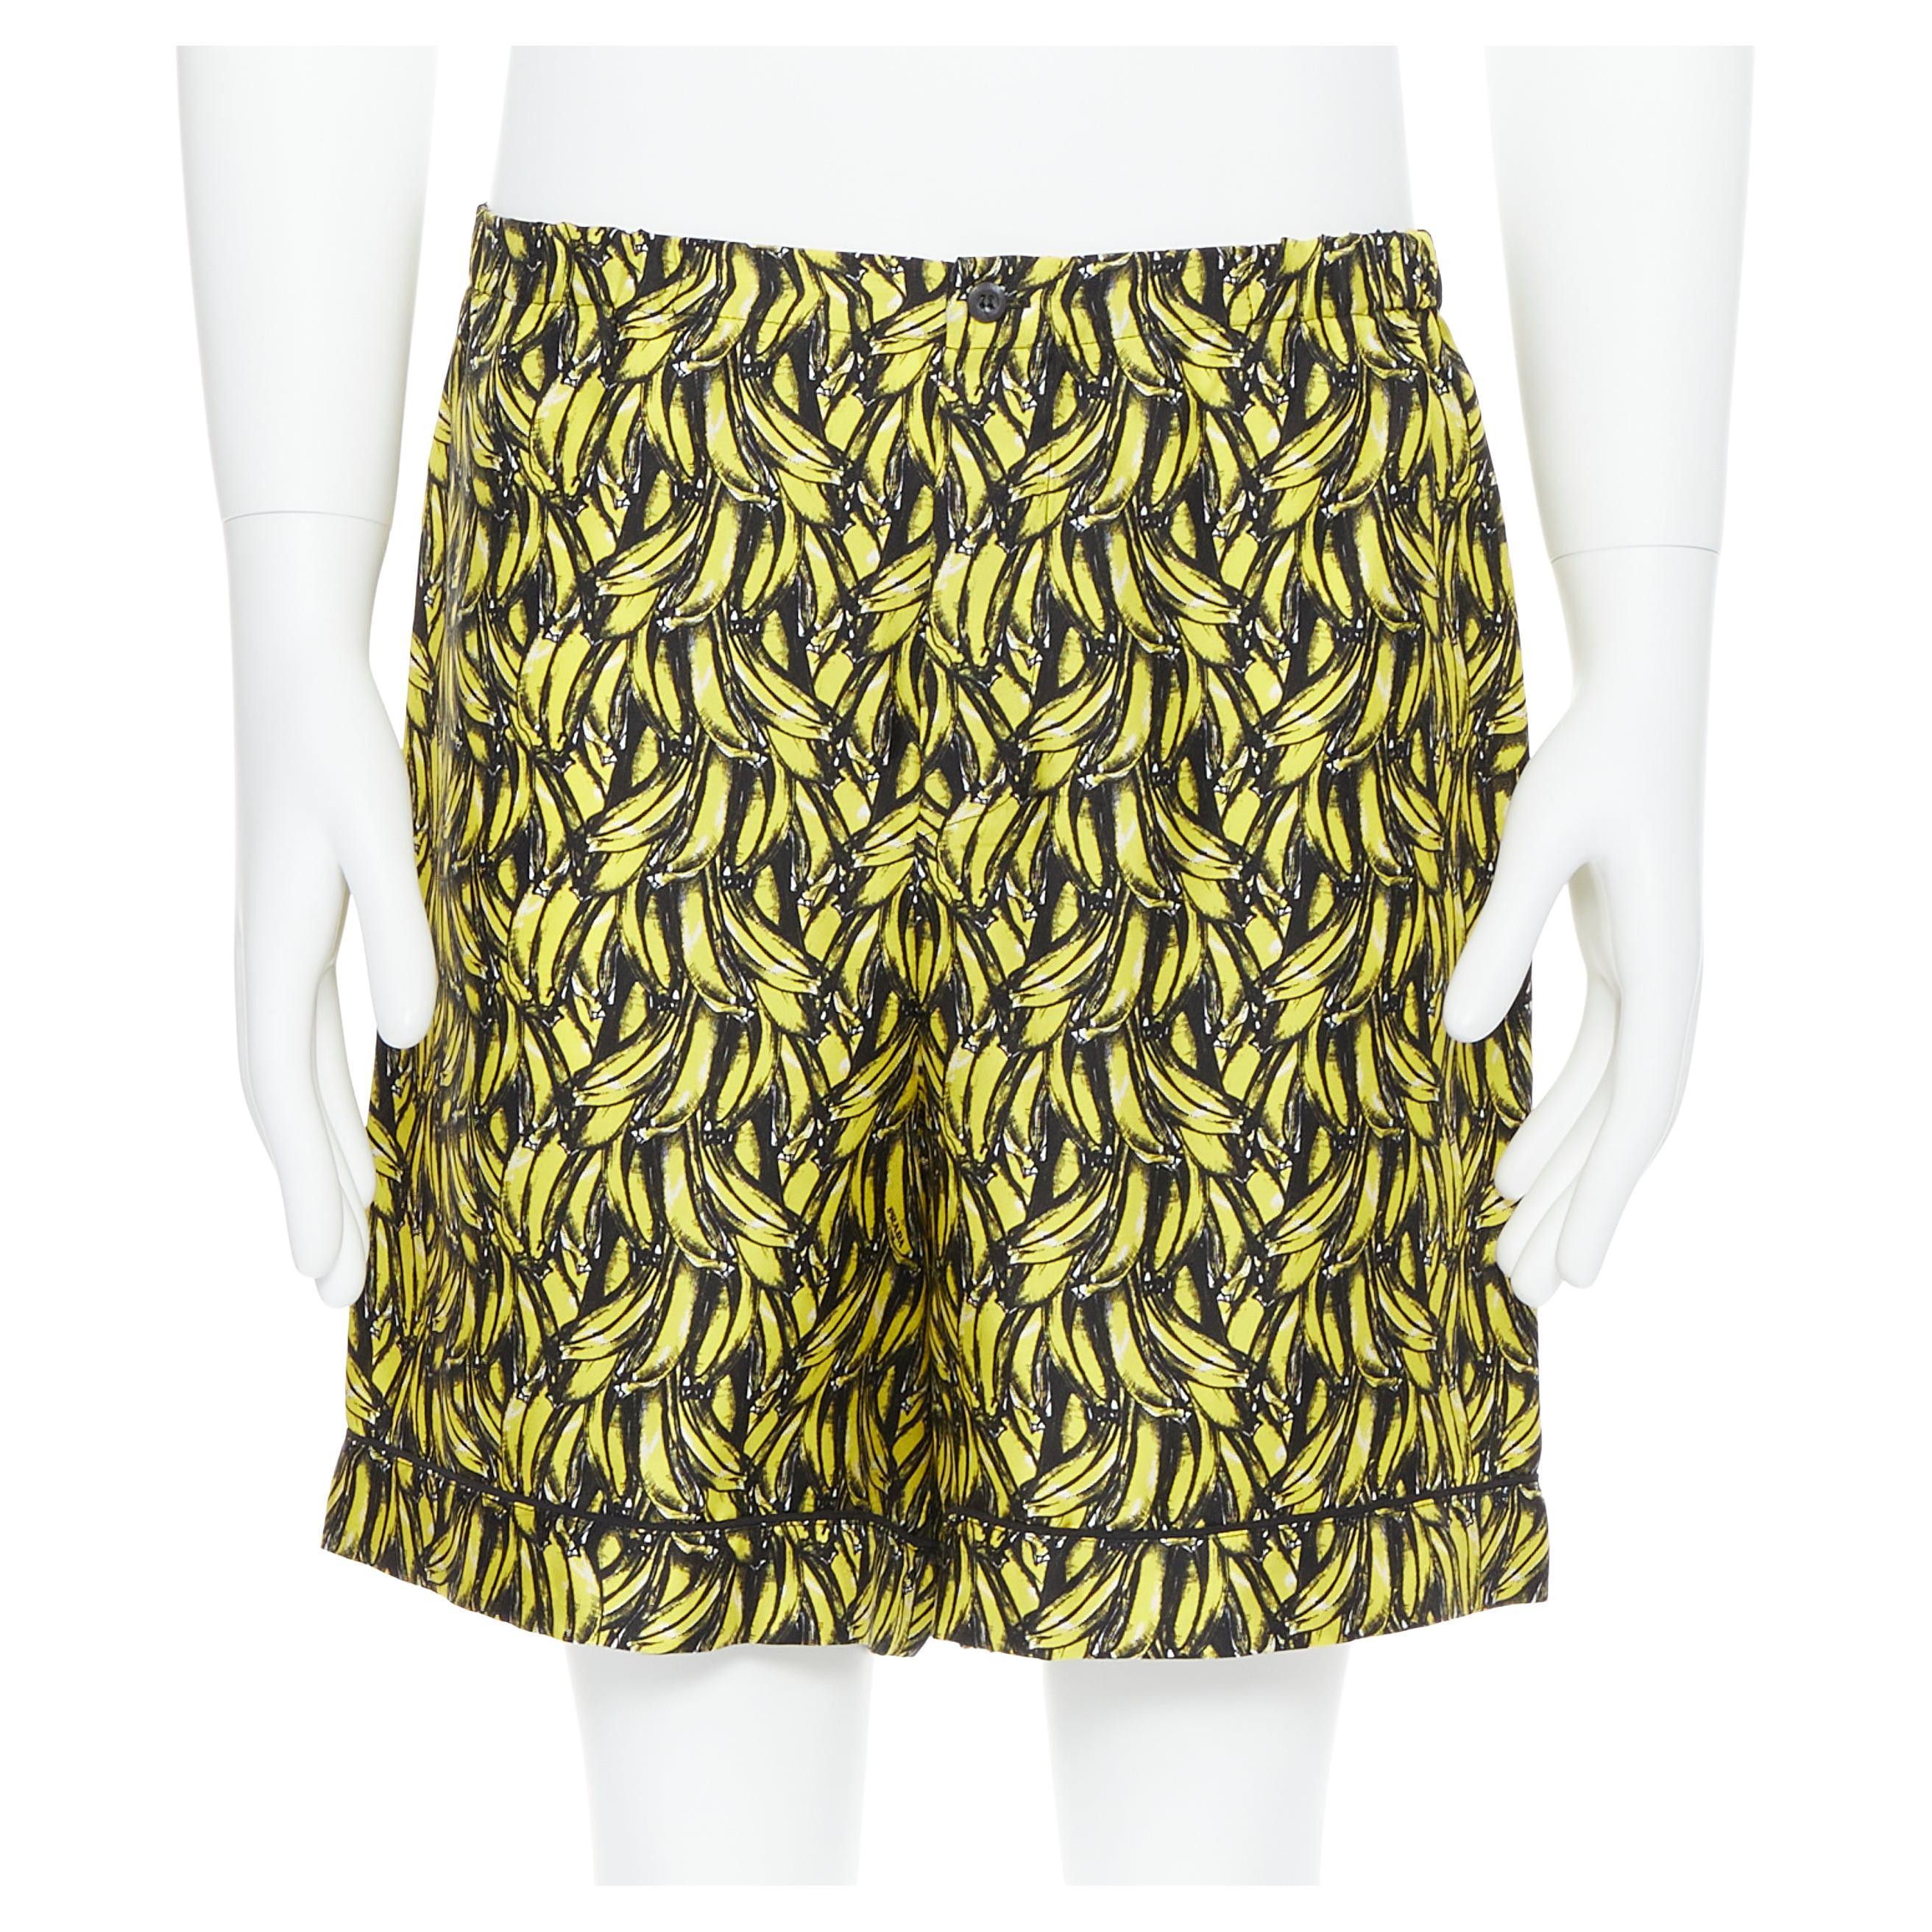 new PRADA iconic banana print 100% silk elasticated waist boxer summer shorts S